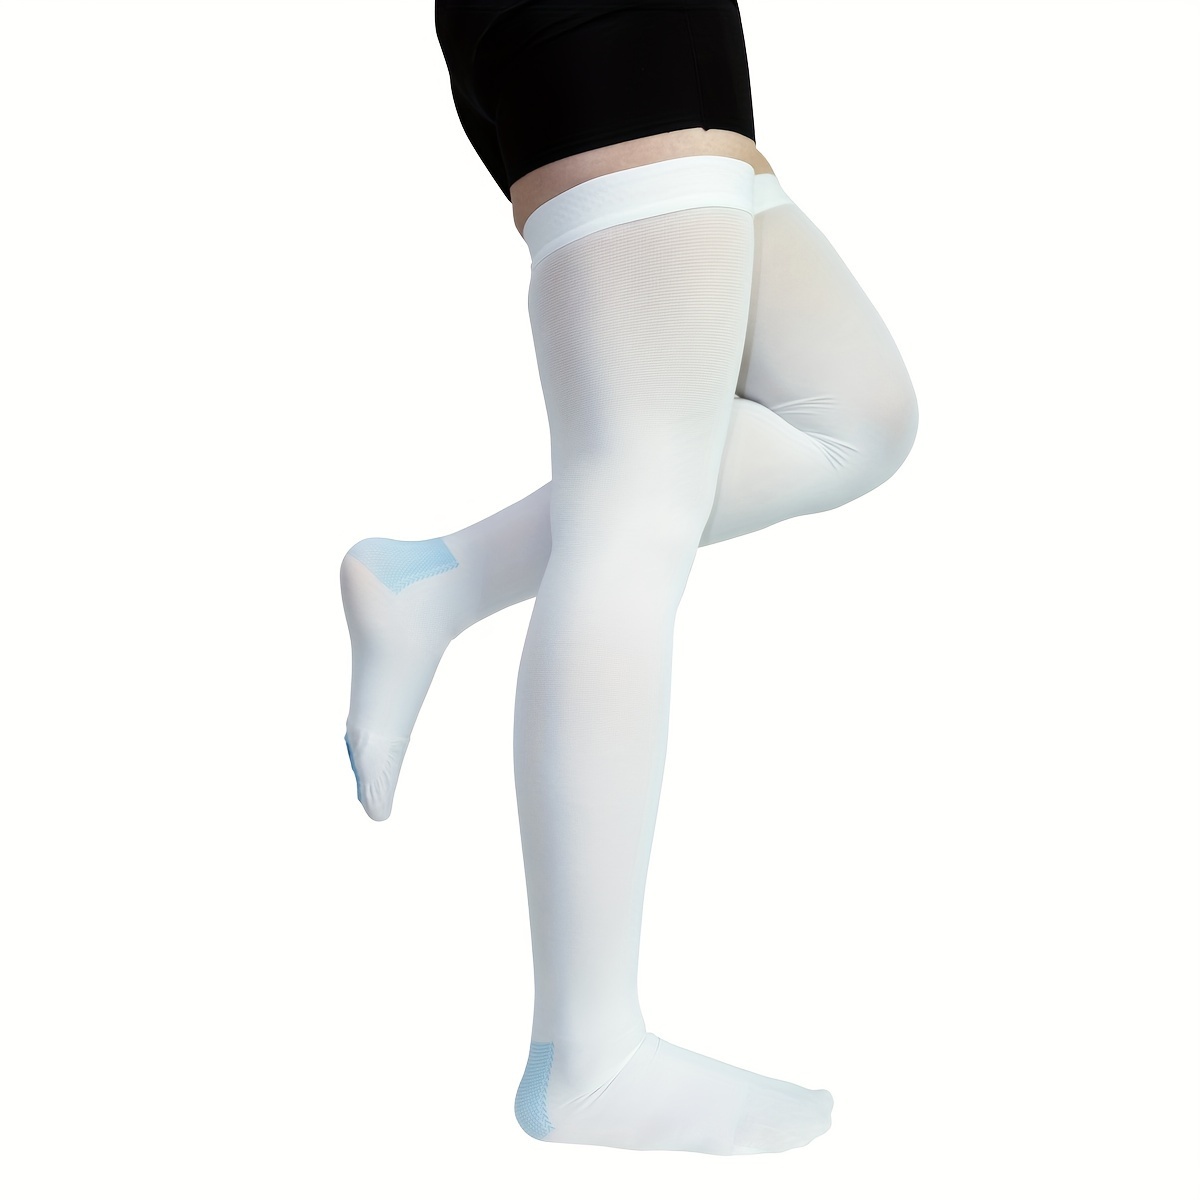 ABIRAM Thigh High Compression Stockings, Unisex Ted Hose Socks, 15